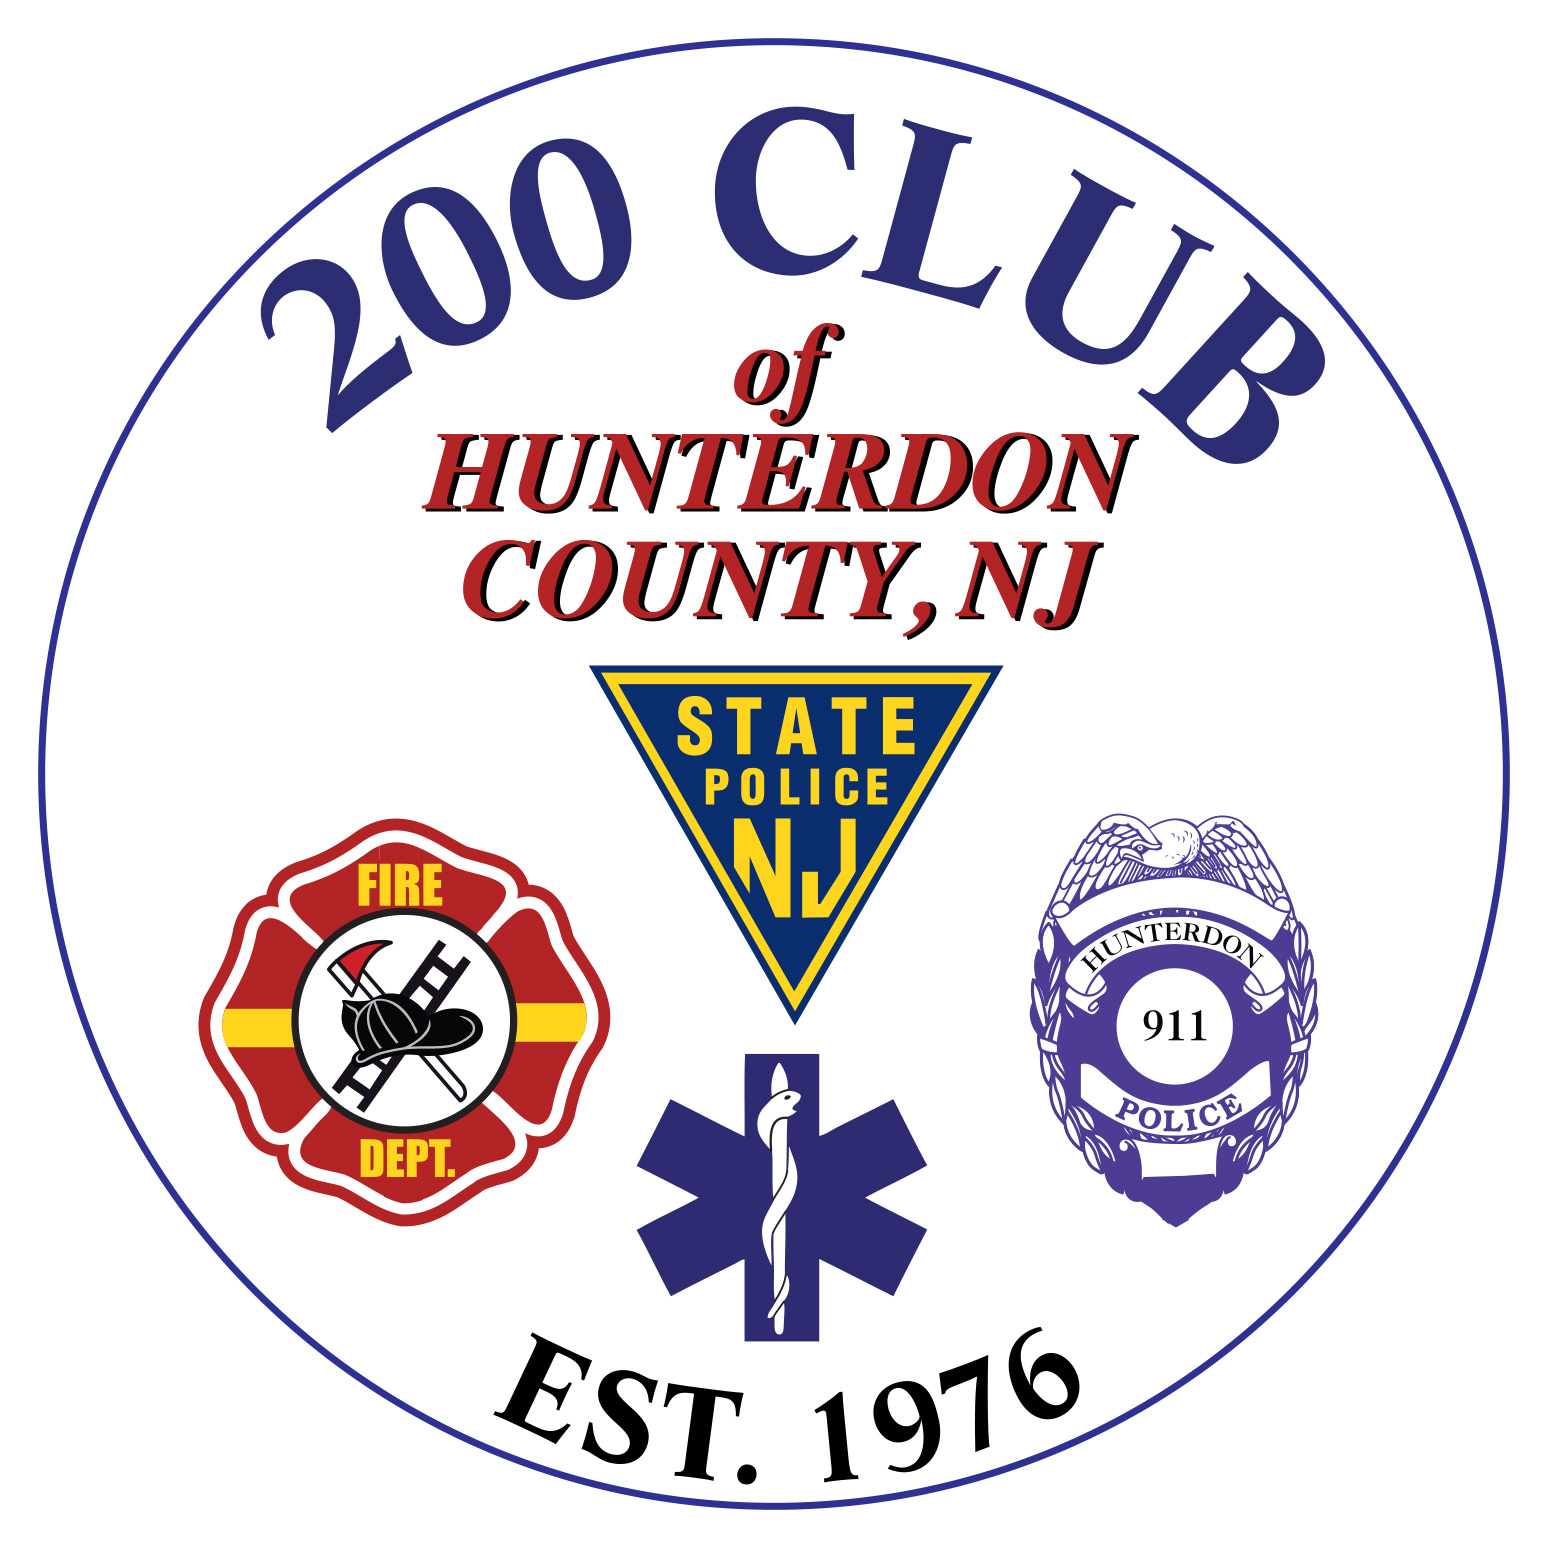 200 Club of Hunterdon County, NJ